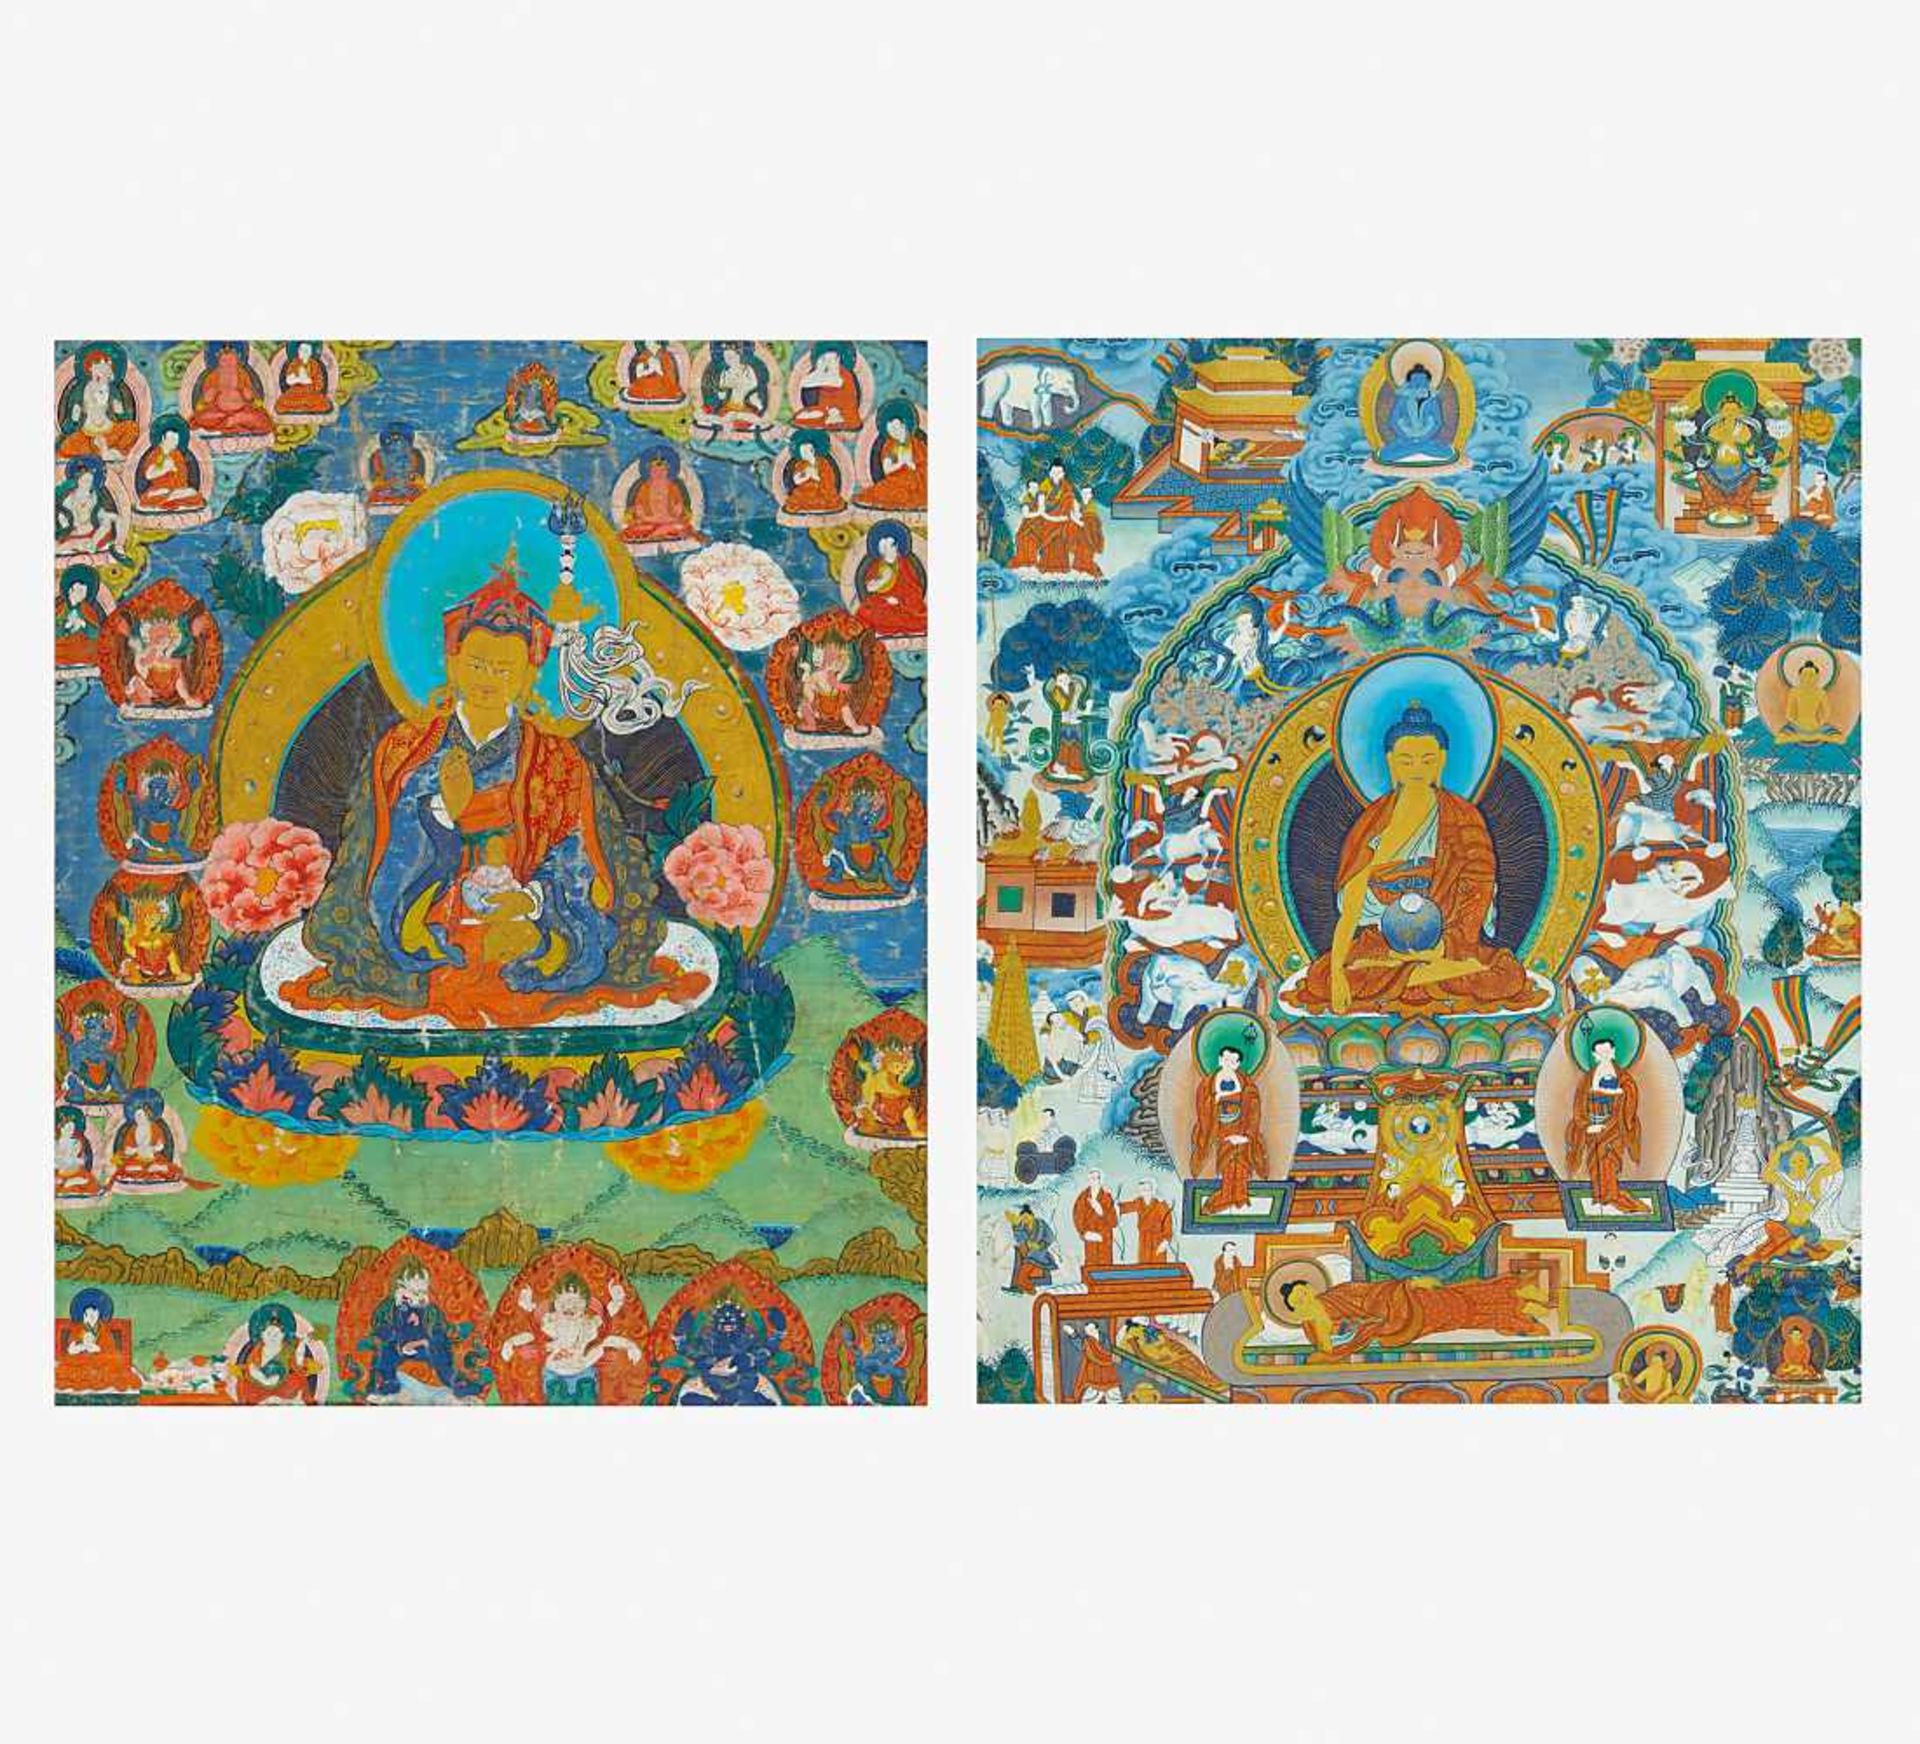 TWO THANGKA OF PADMASAMBHAVA AND THE LIFE OF BUDDHA.